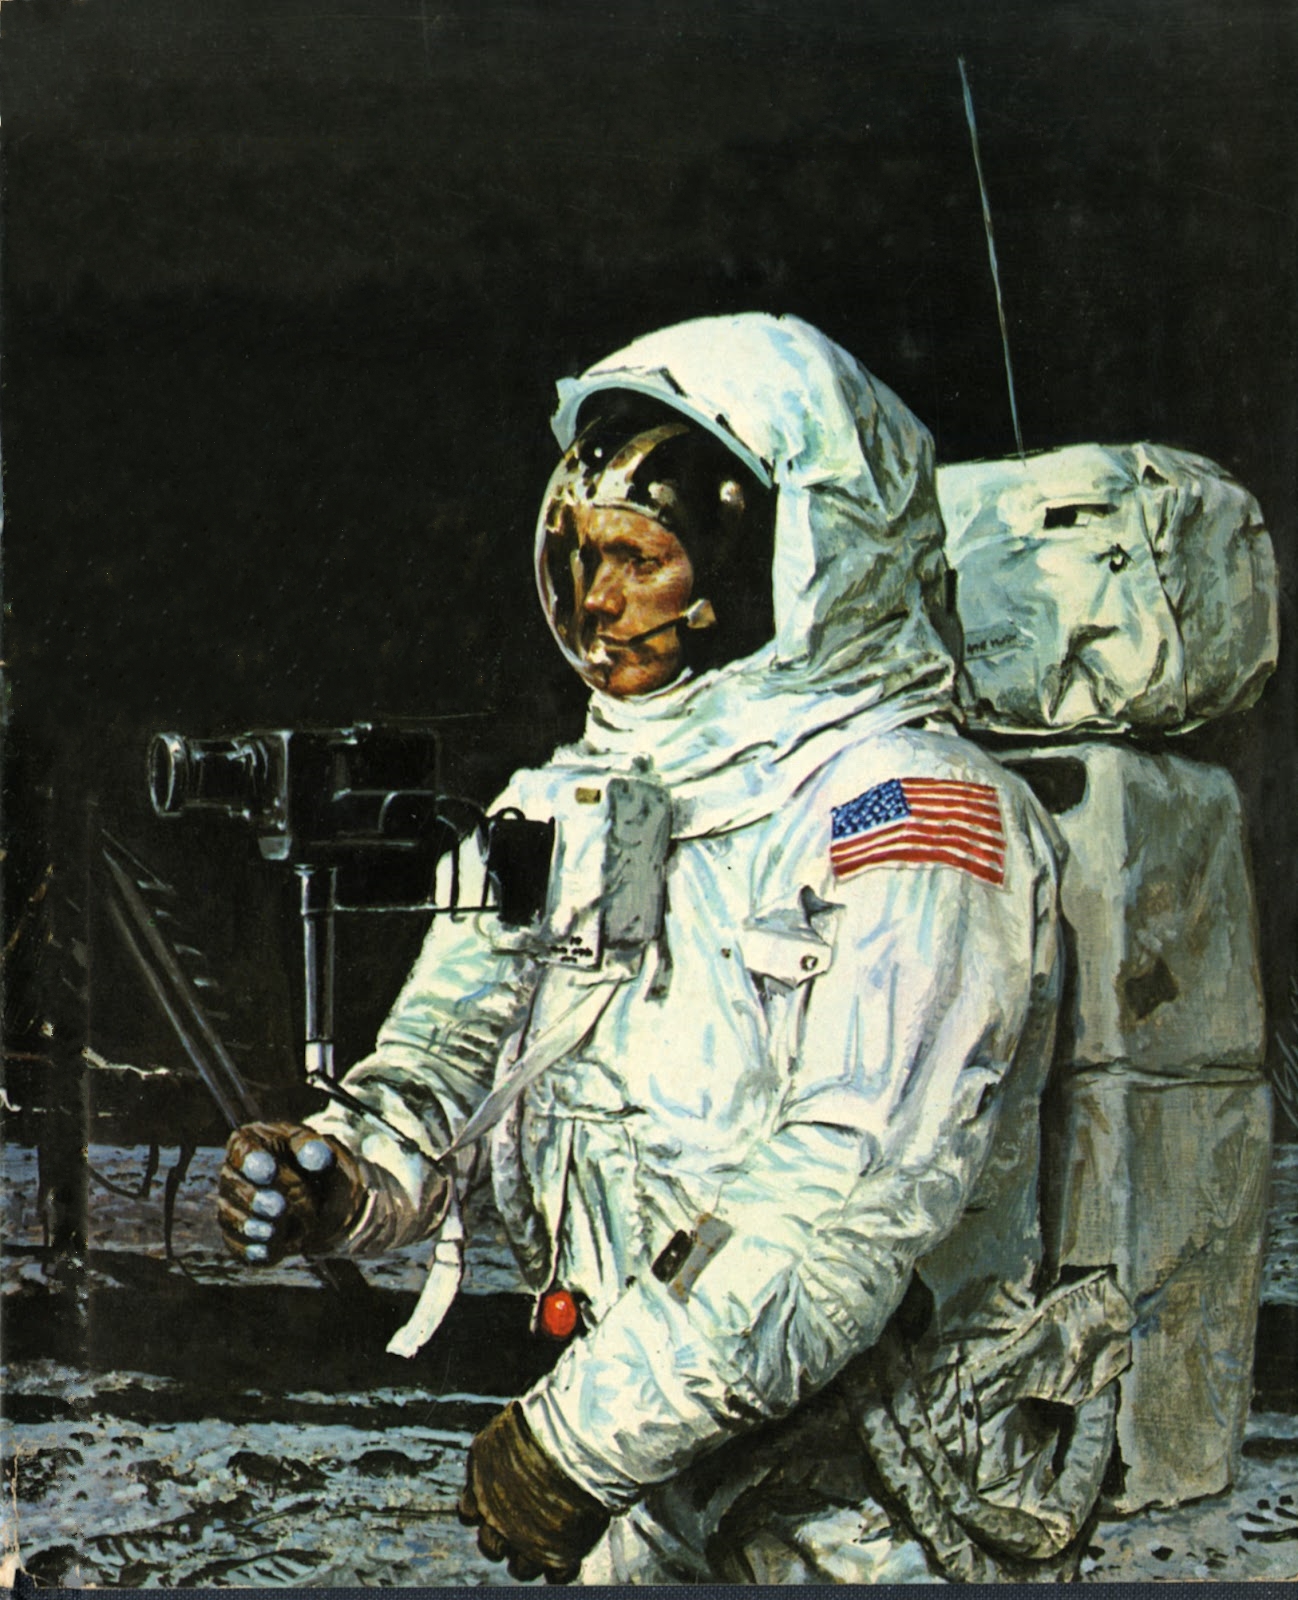 Armstrong on the moon. Армстронг на Луне. Первый человек вступивший на луну. Neil Armstrong on the Moon.